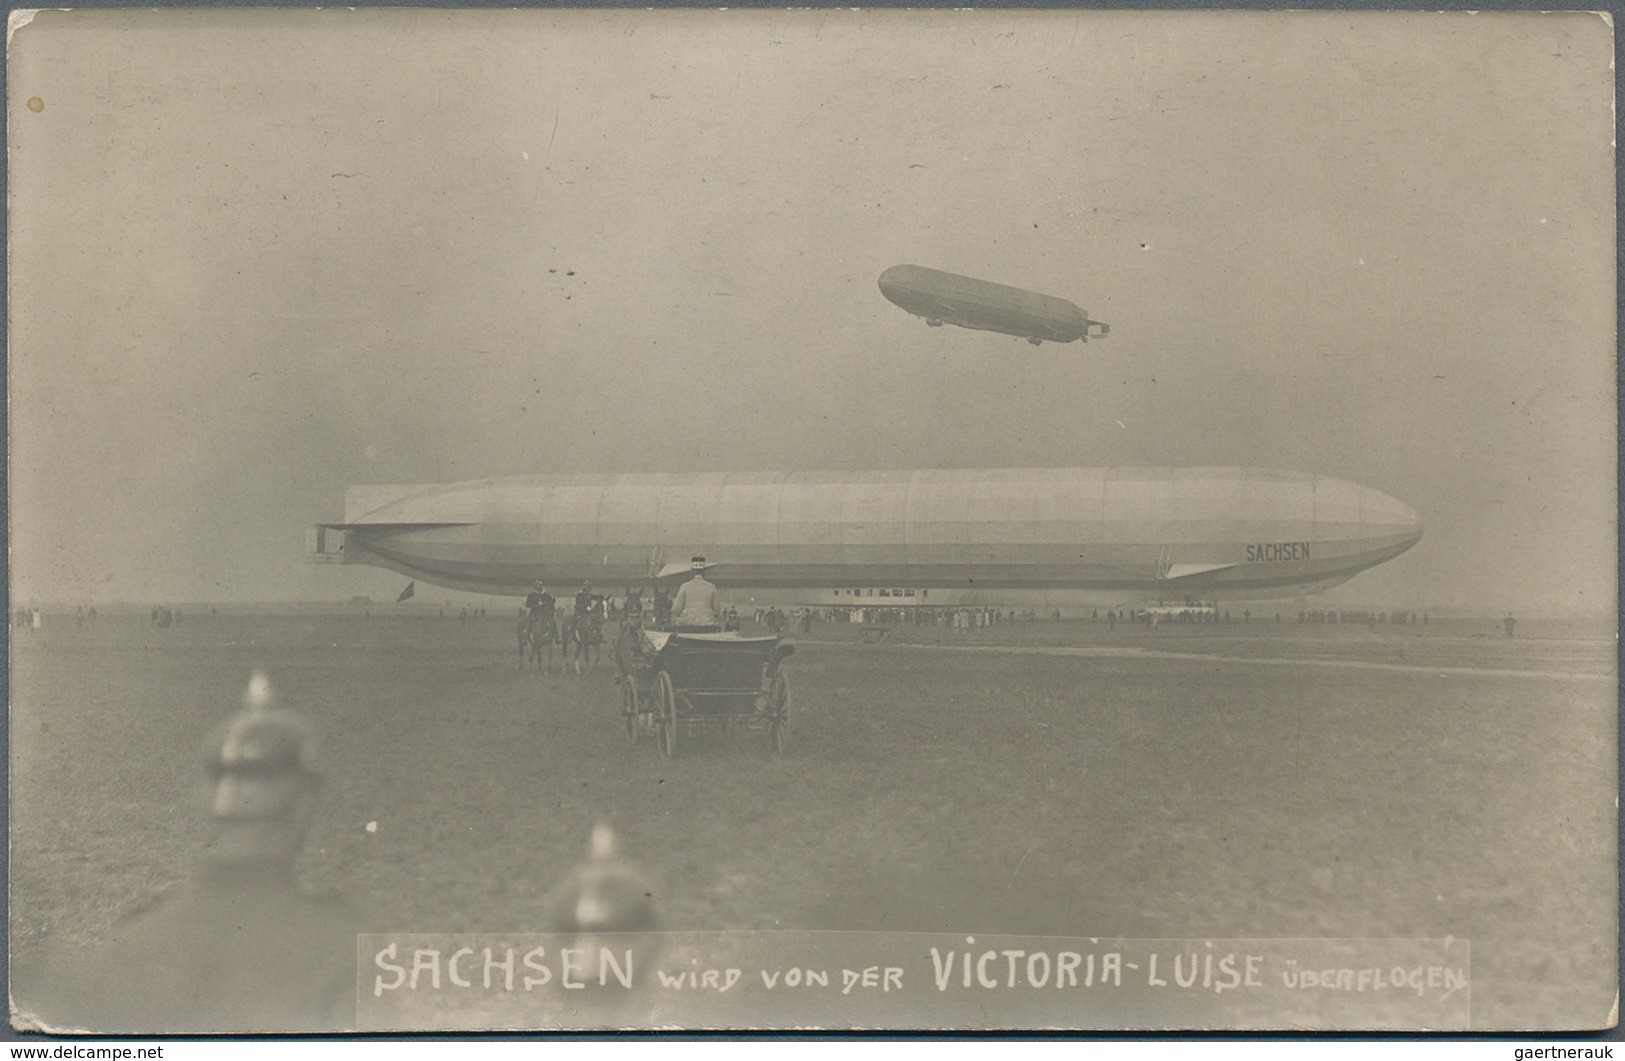 Zeppelinpost Deutschland: Collection of over 120 Zeppelin items with dozens of flown covers includin